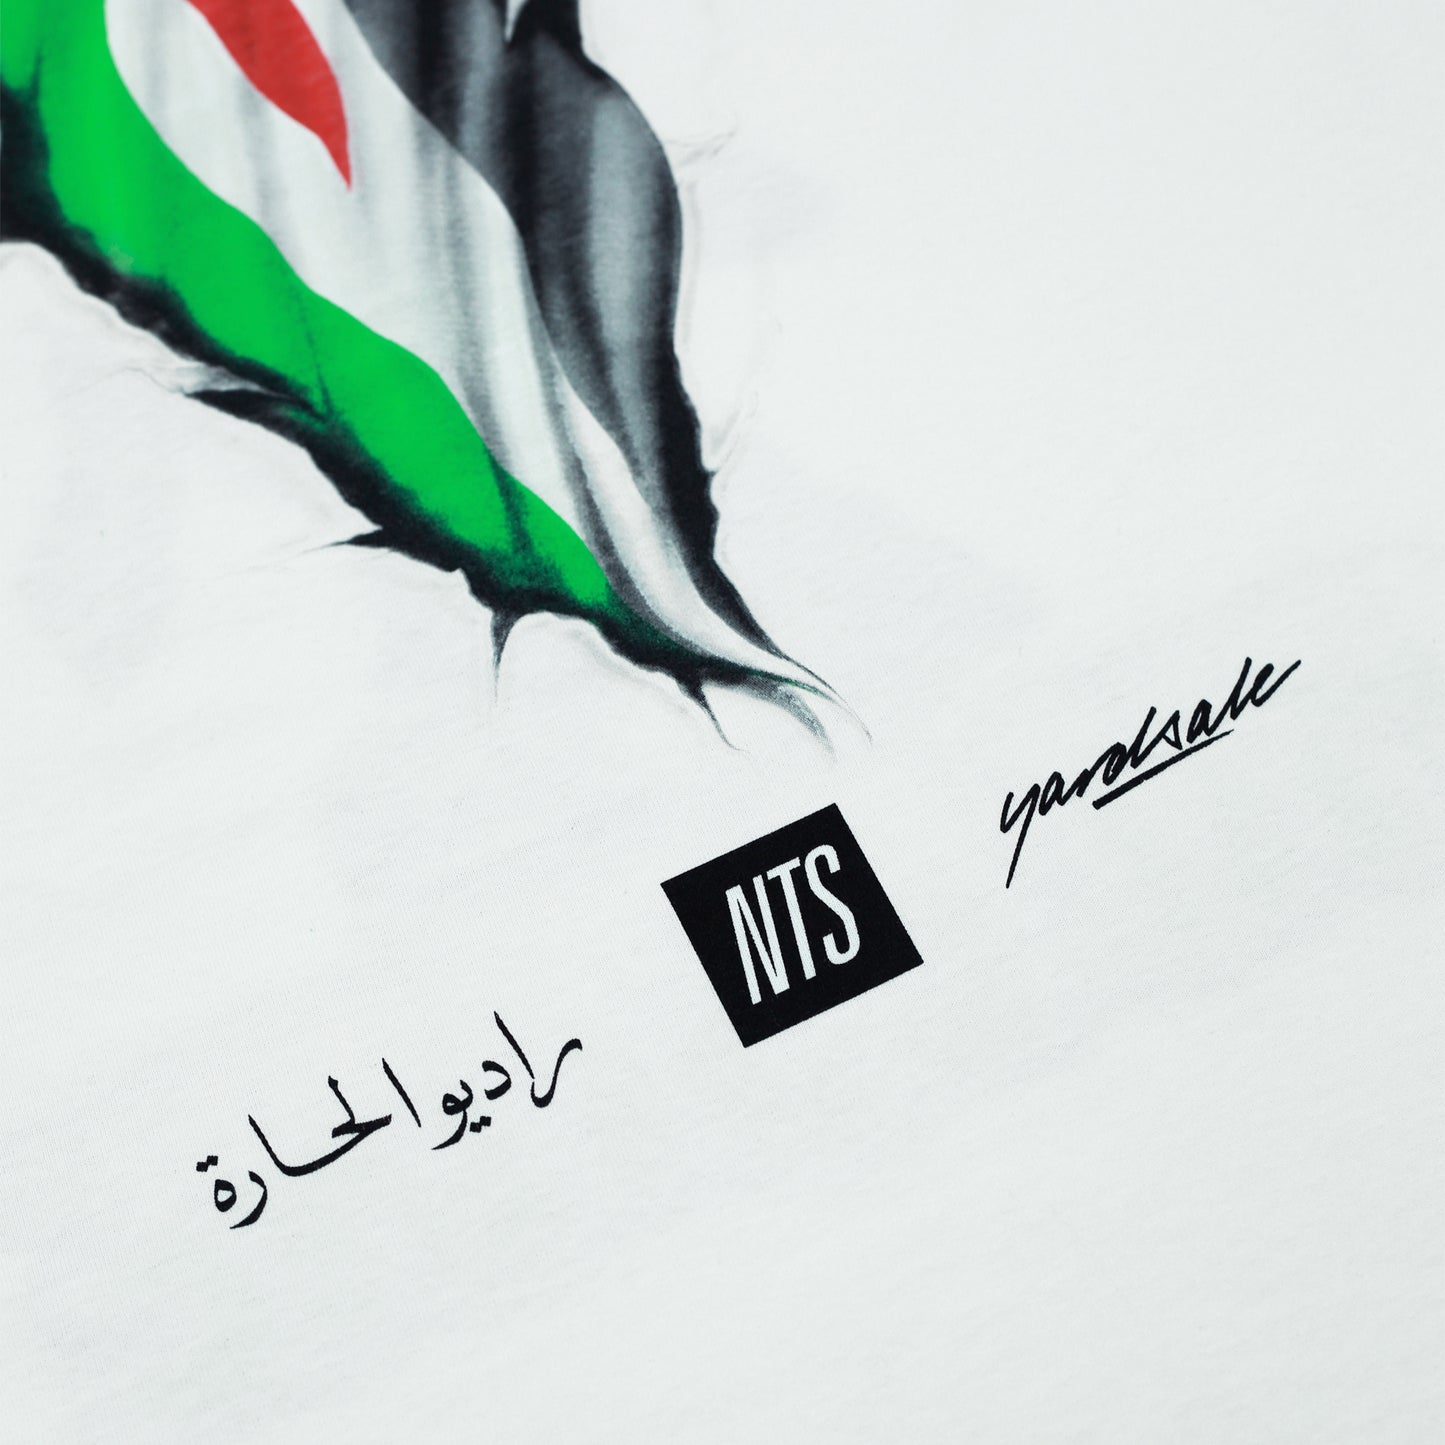 Free Palestine T-Shirt (White)